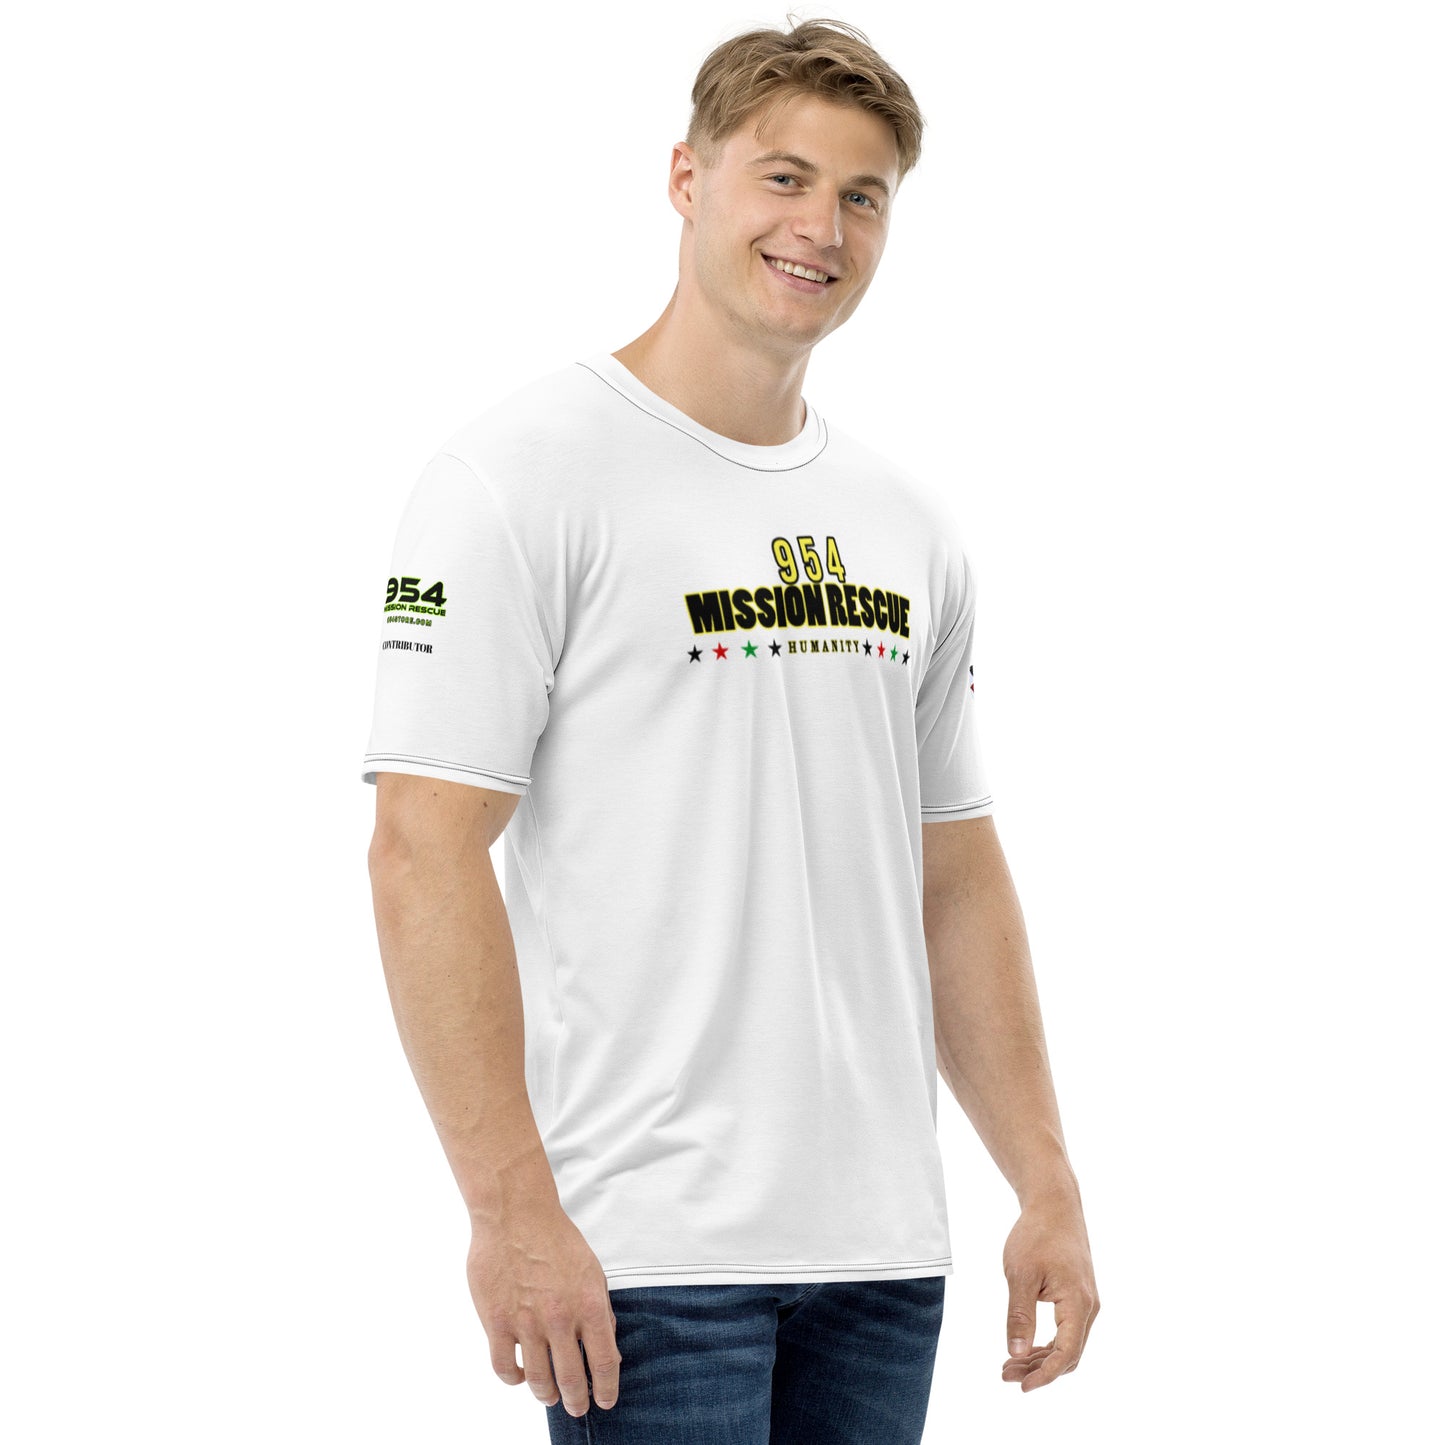 Contributor 954 Men's t-shirt